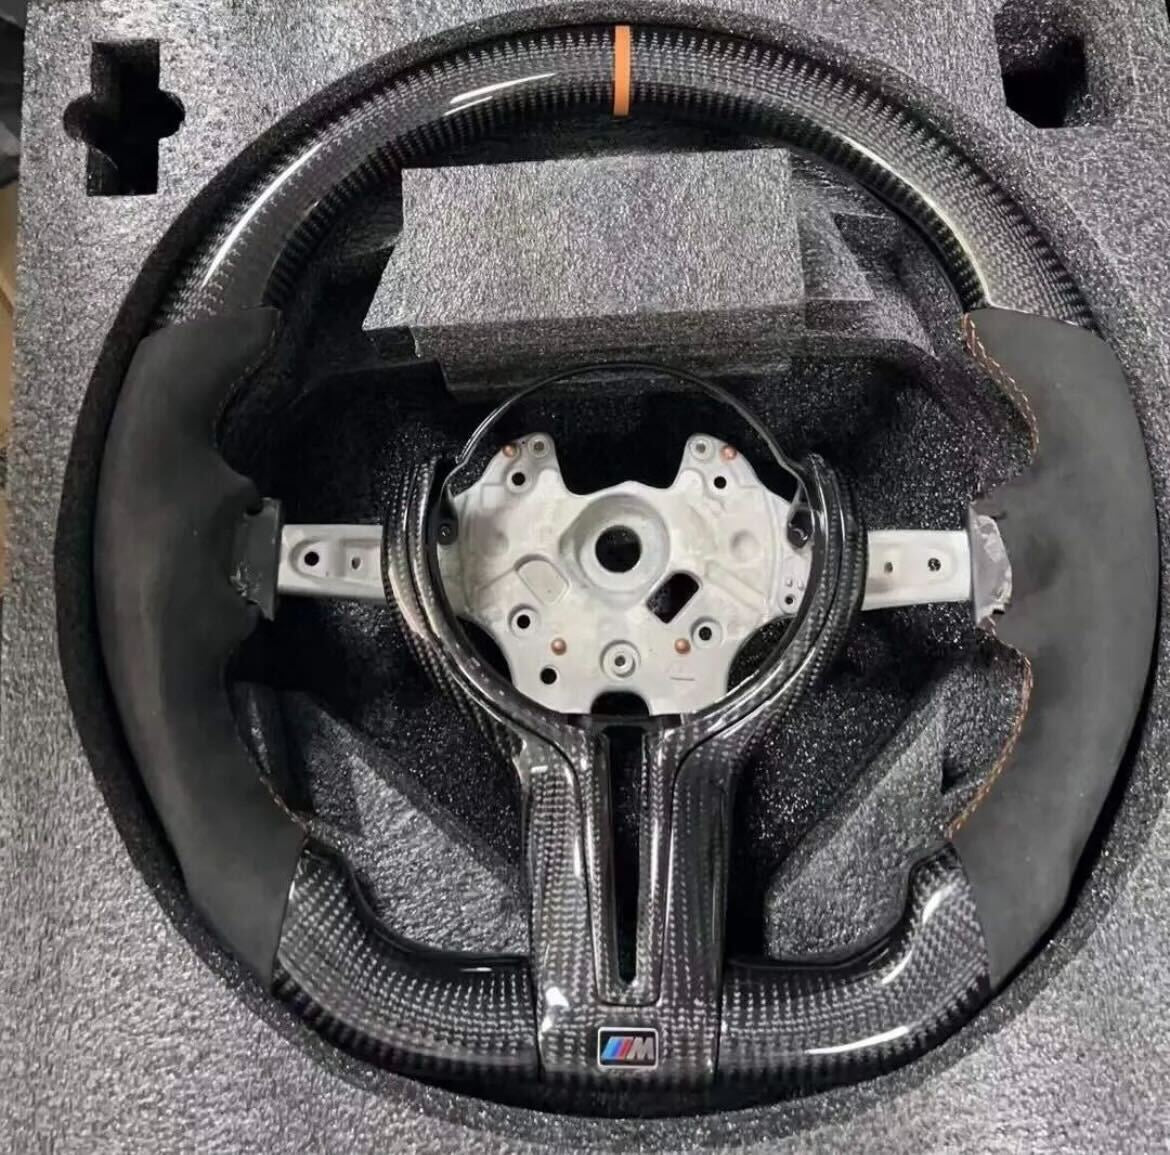 BMW - Carbon Fiber Steering Wheel (Custom)